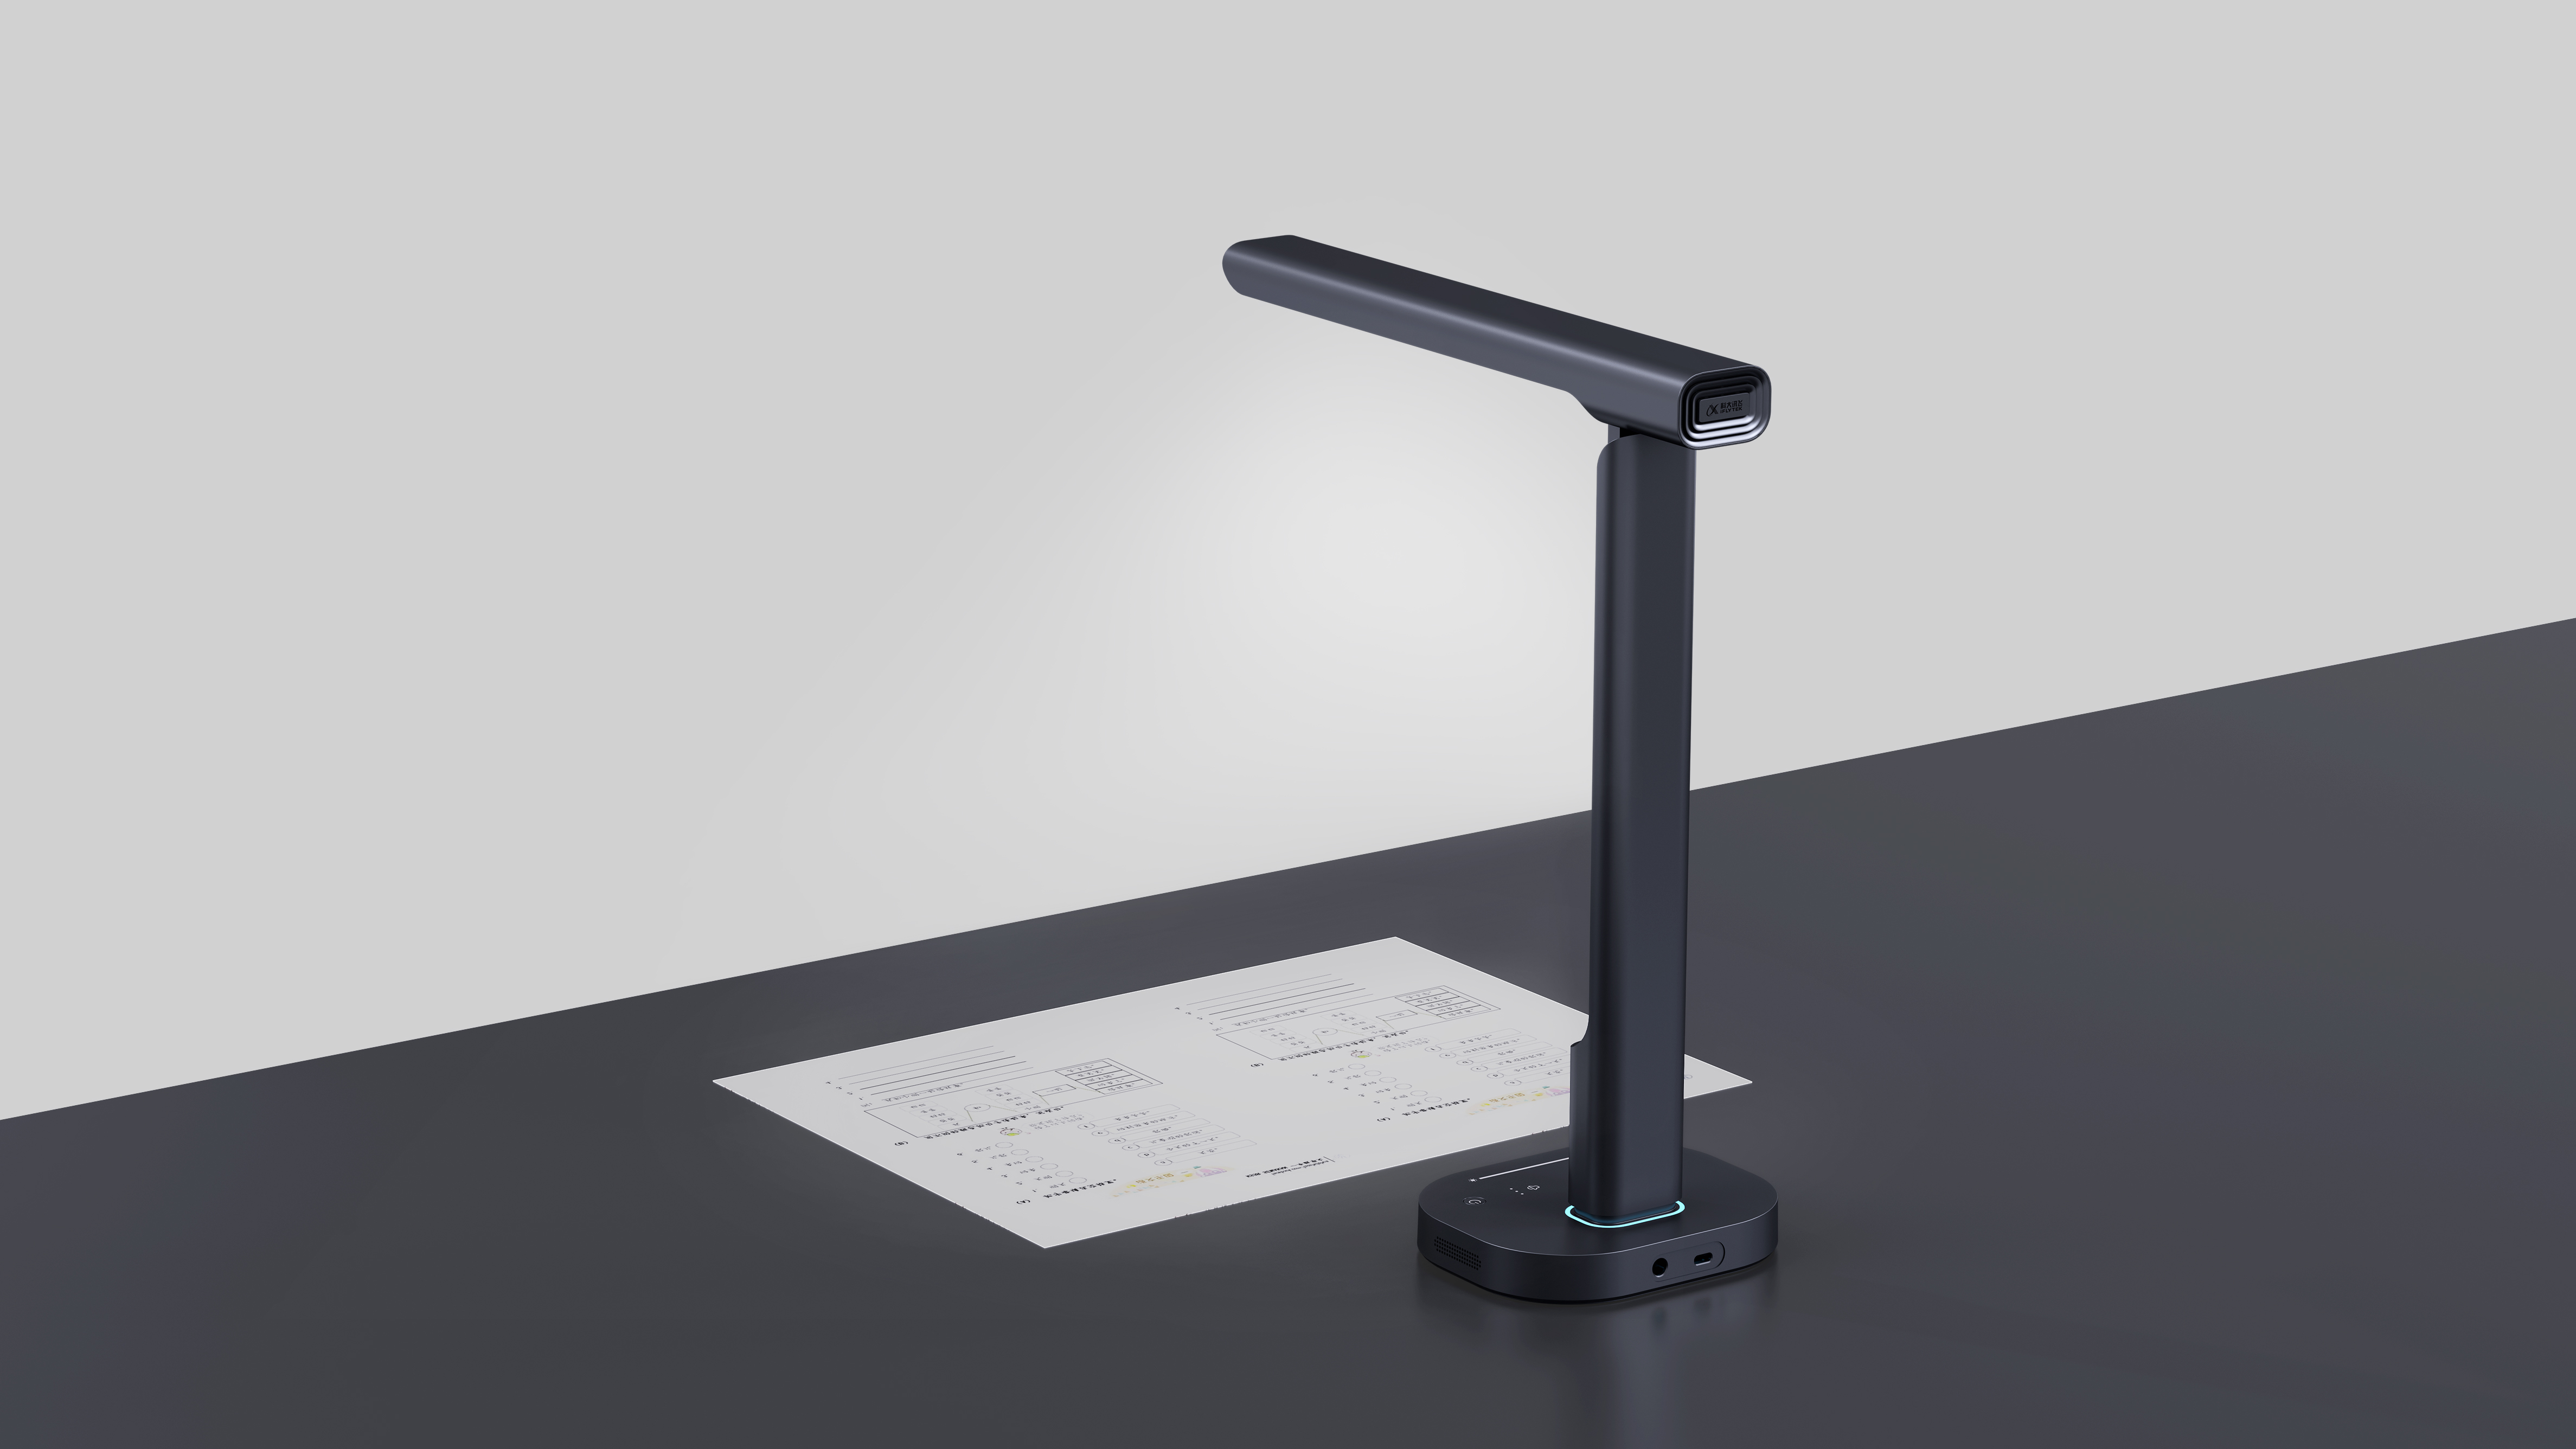 iFLYTEK AI Desk Lamp Z1